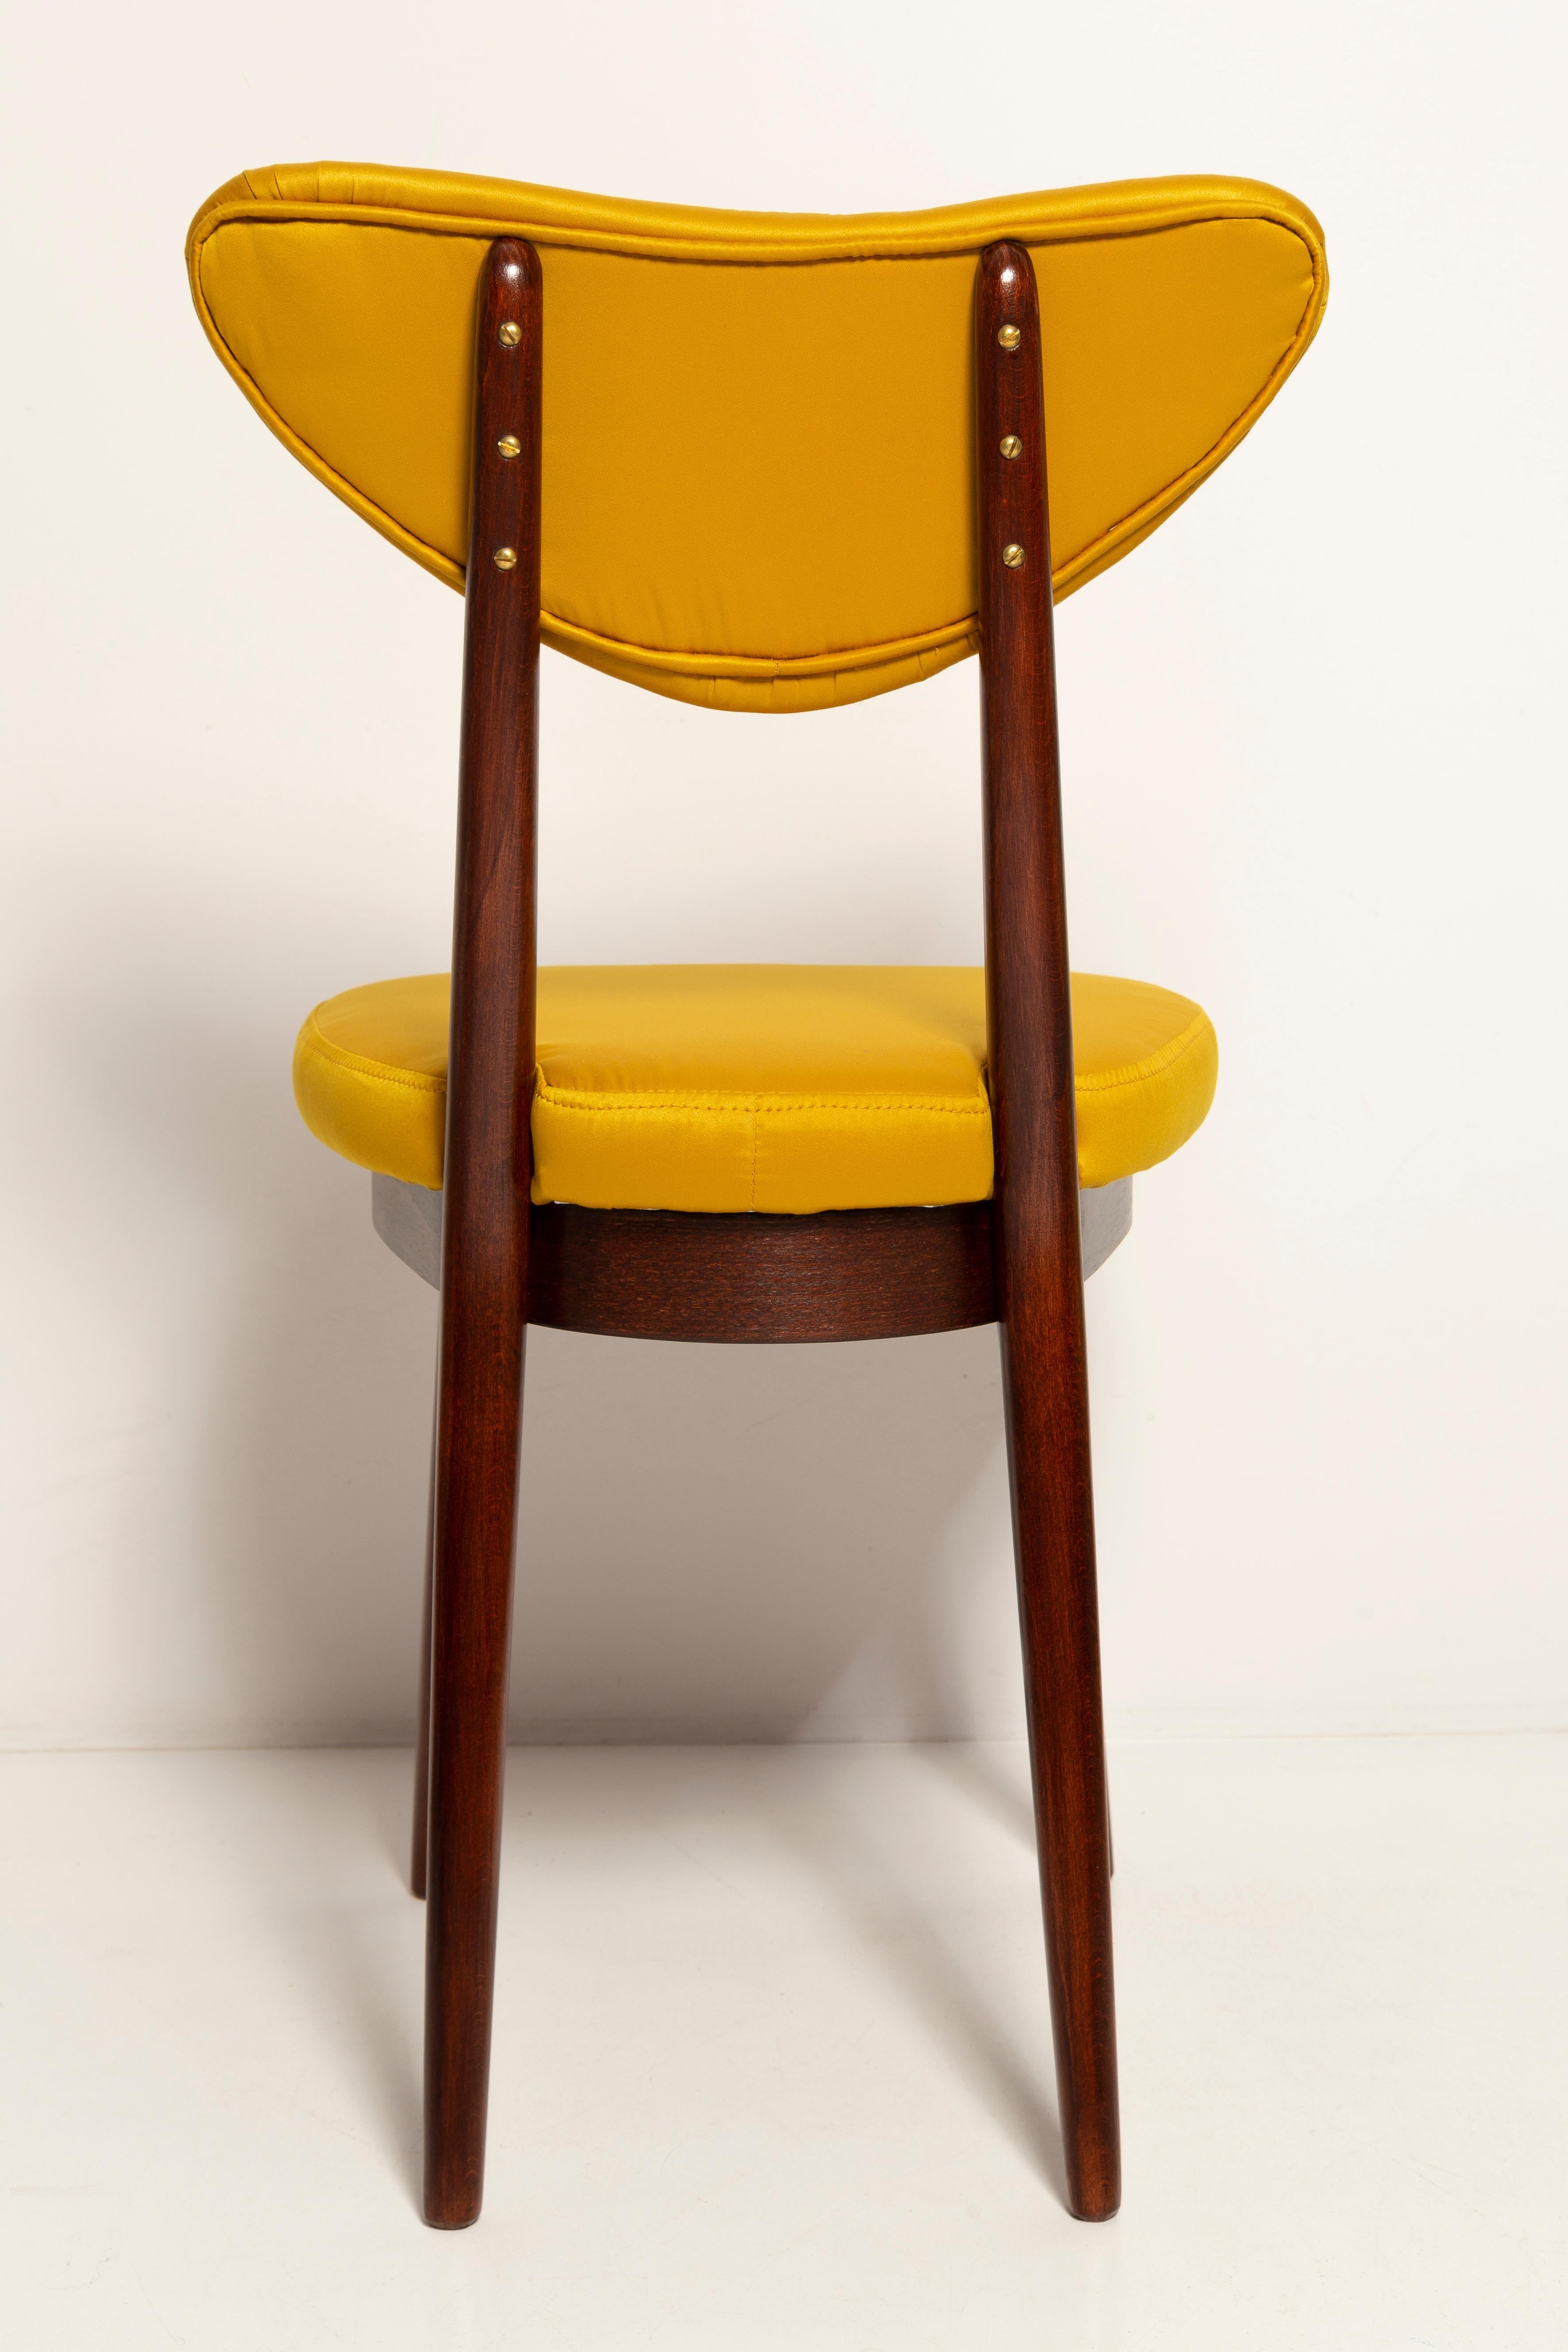 Twelve Midcentury Heart Chairs, Yellow Satin Dedar Gildo Fabric, Europe, 1960s For Sale 2